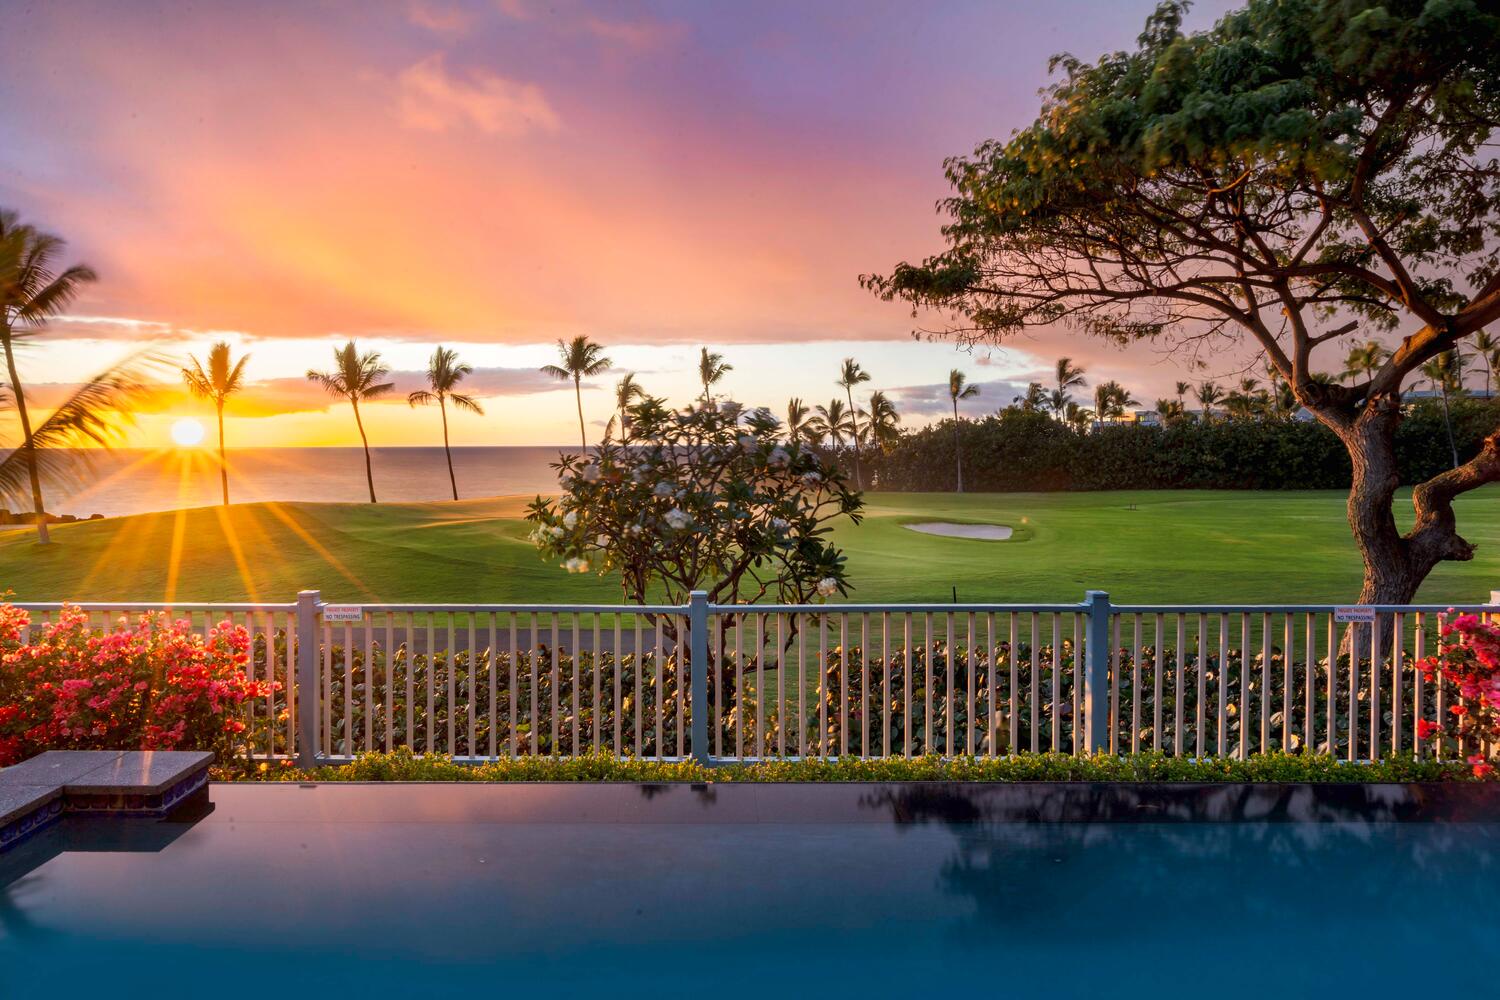 Kailua-Kona Vacation Rentals, Holua Kai #26 - Dreamy sunset over a tranquil golf course and ocean horizon.